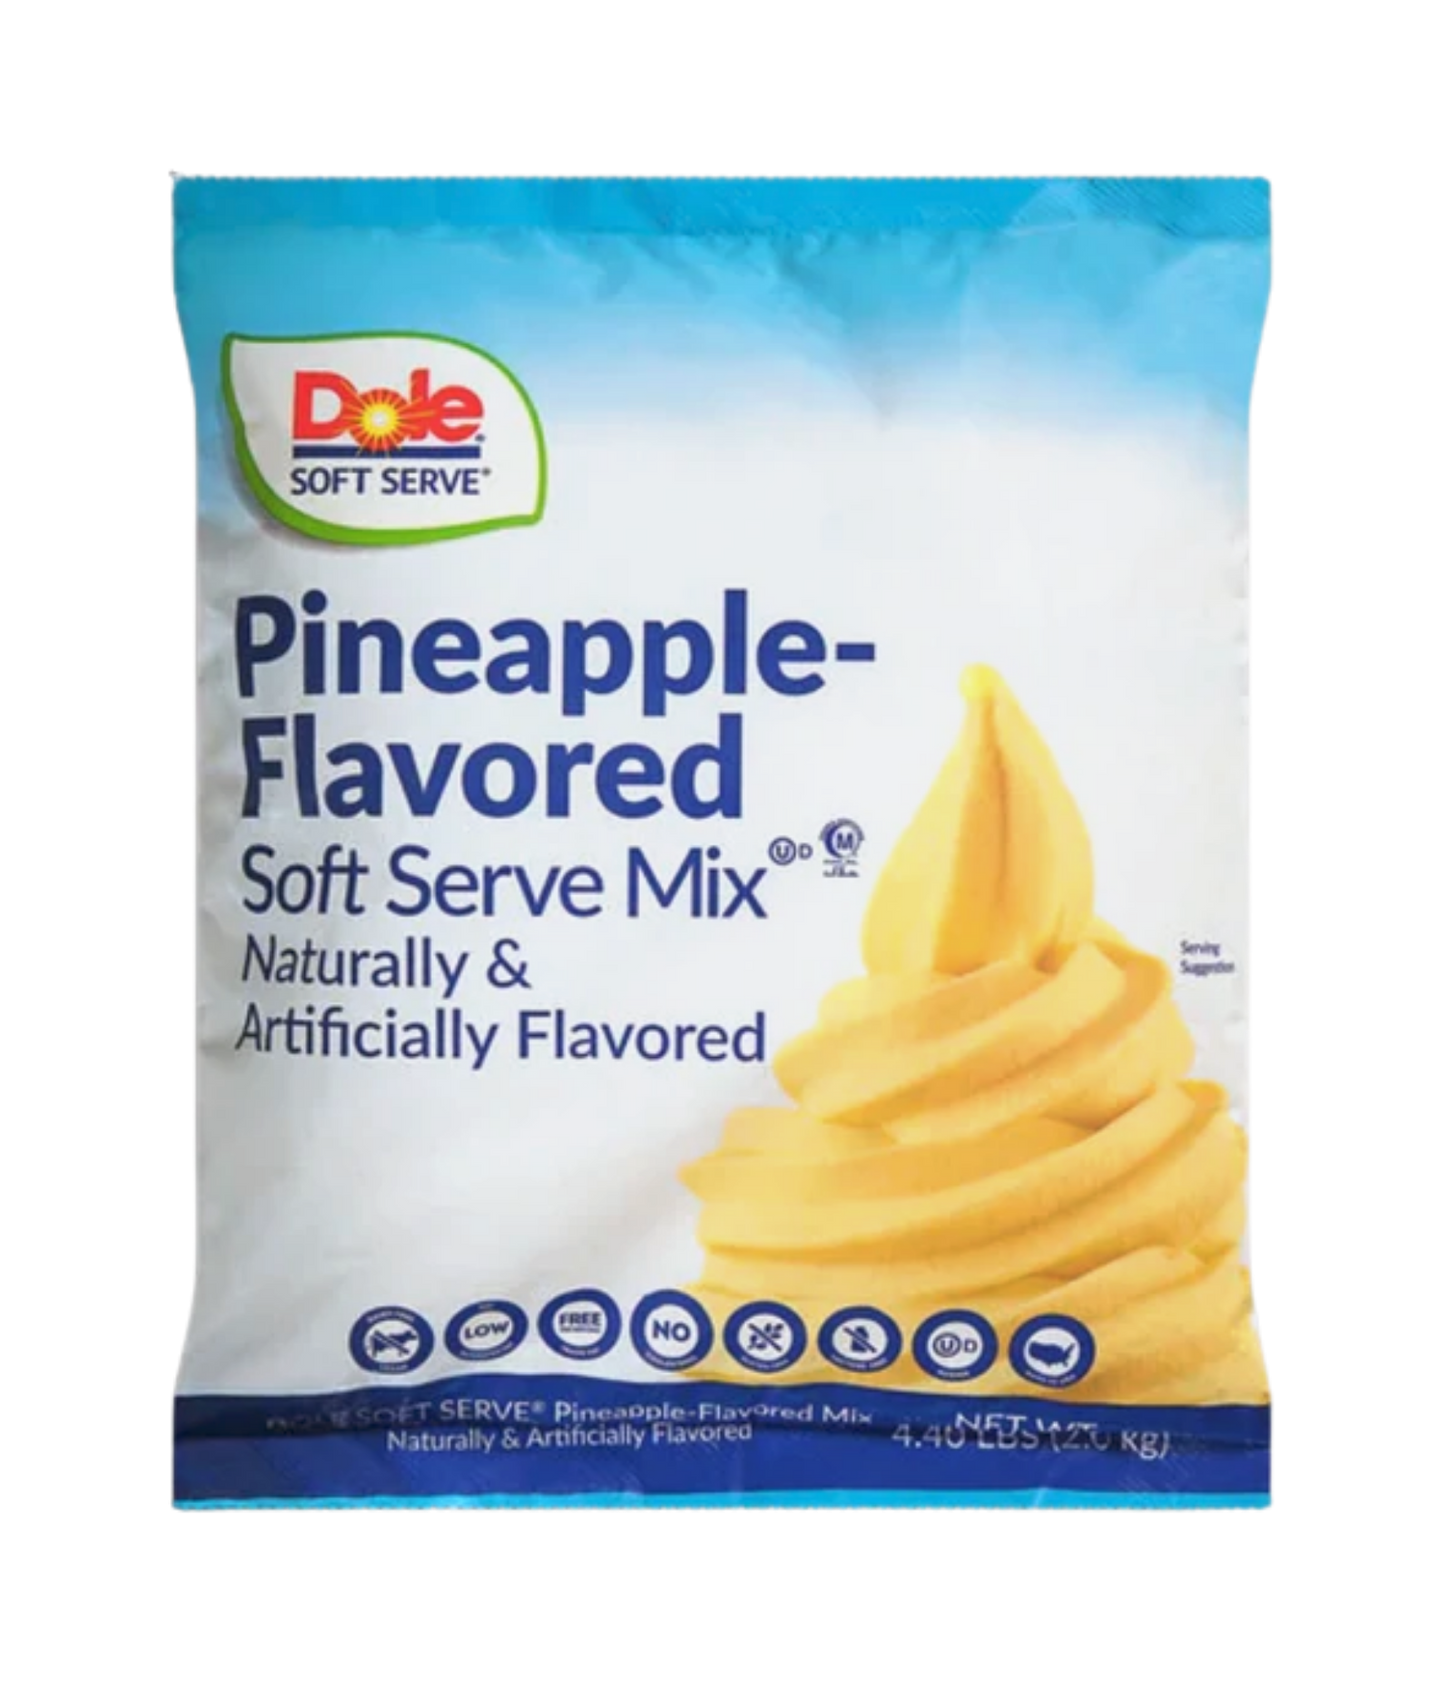 Dole Pineapple Soft Serve Mix 4.4 lbs - 4 pack